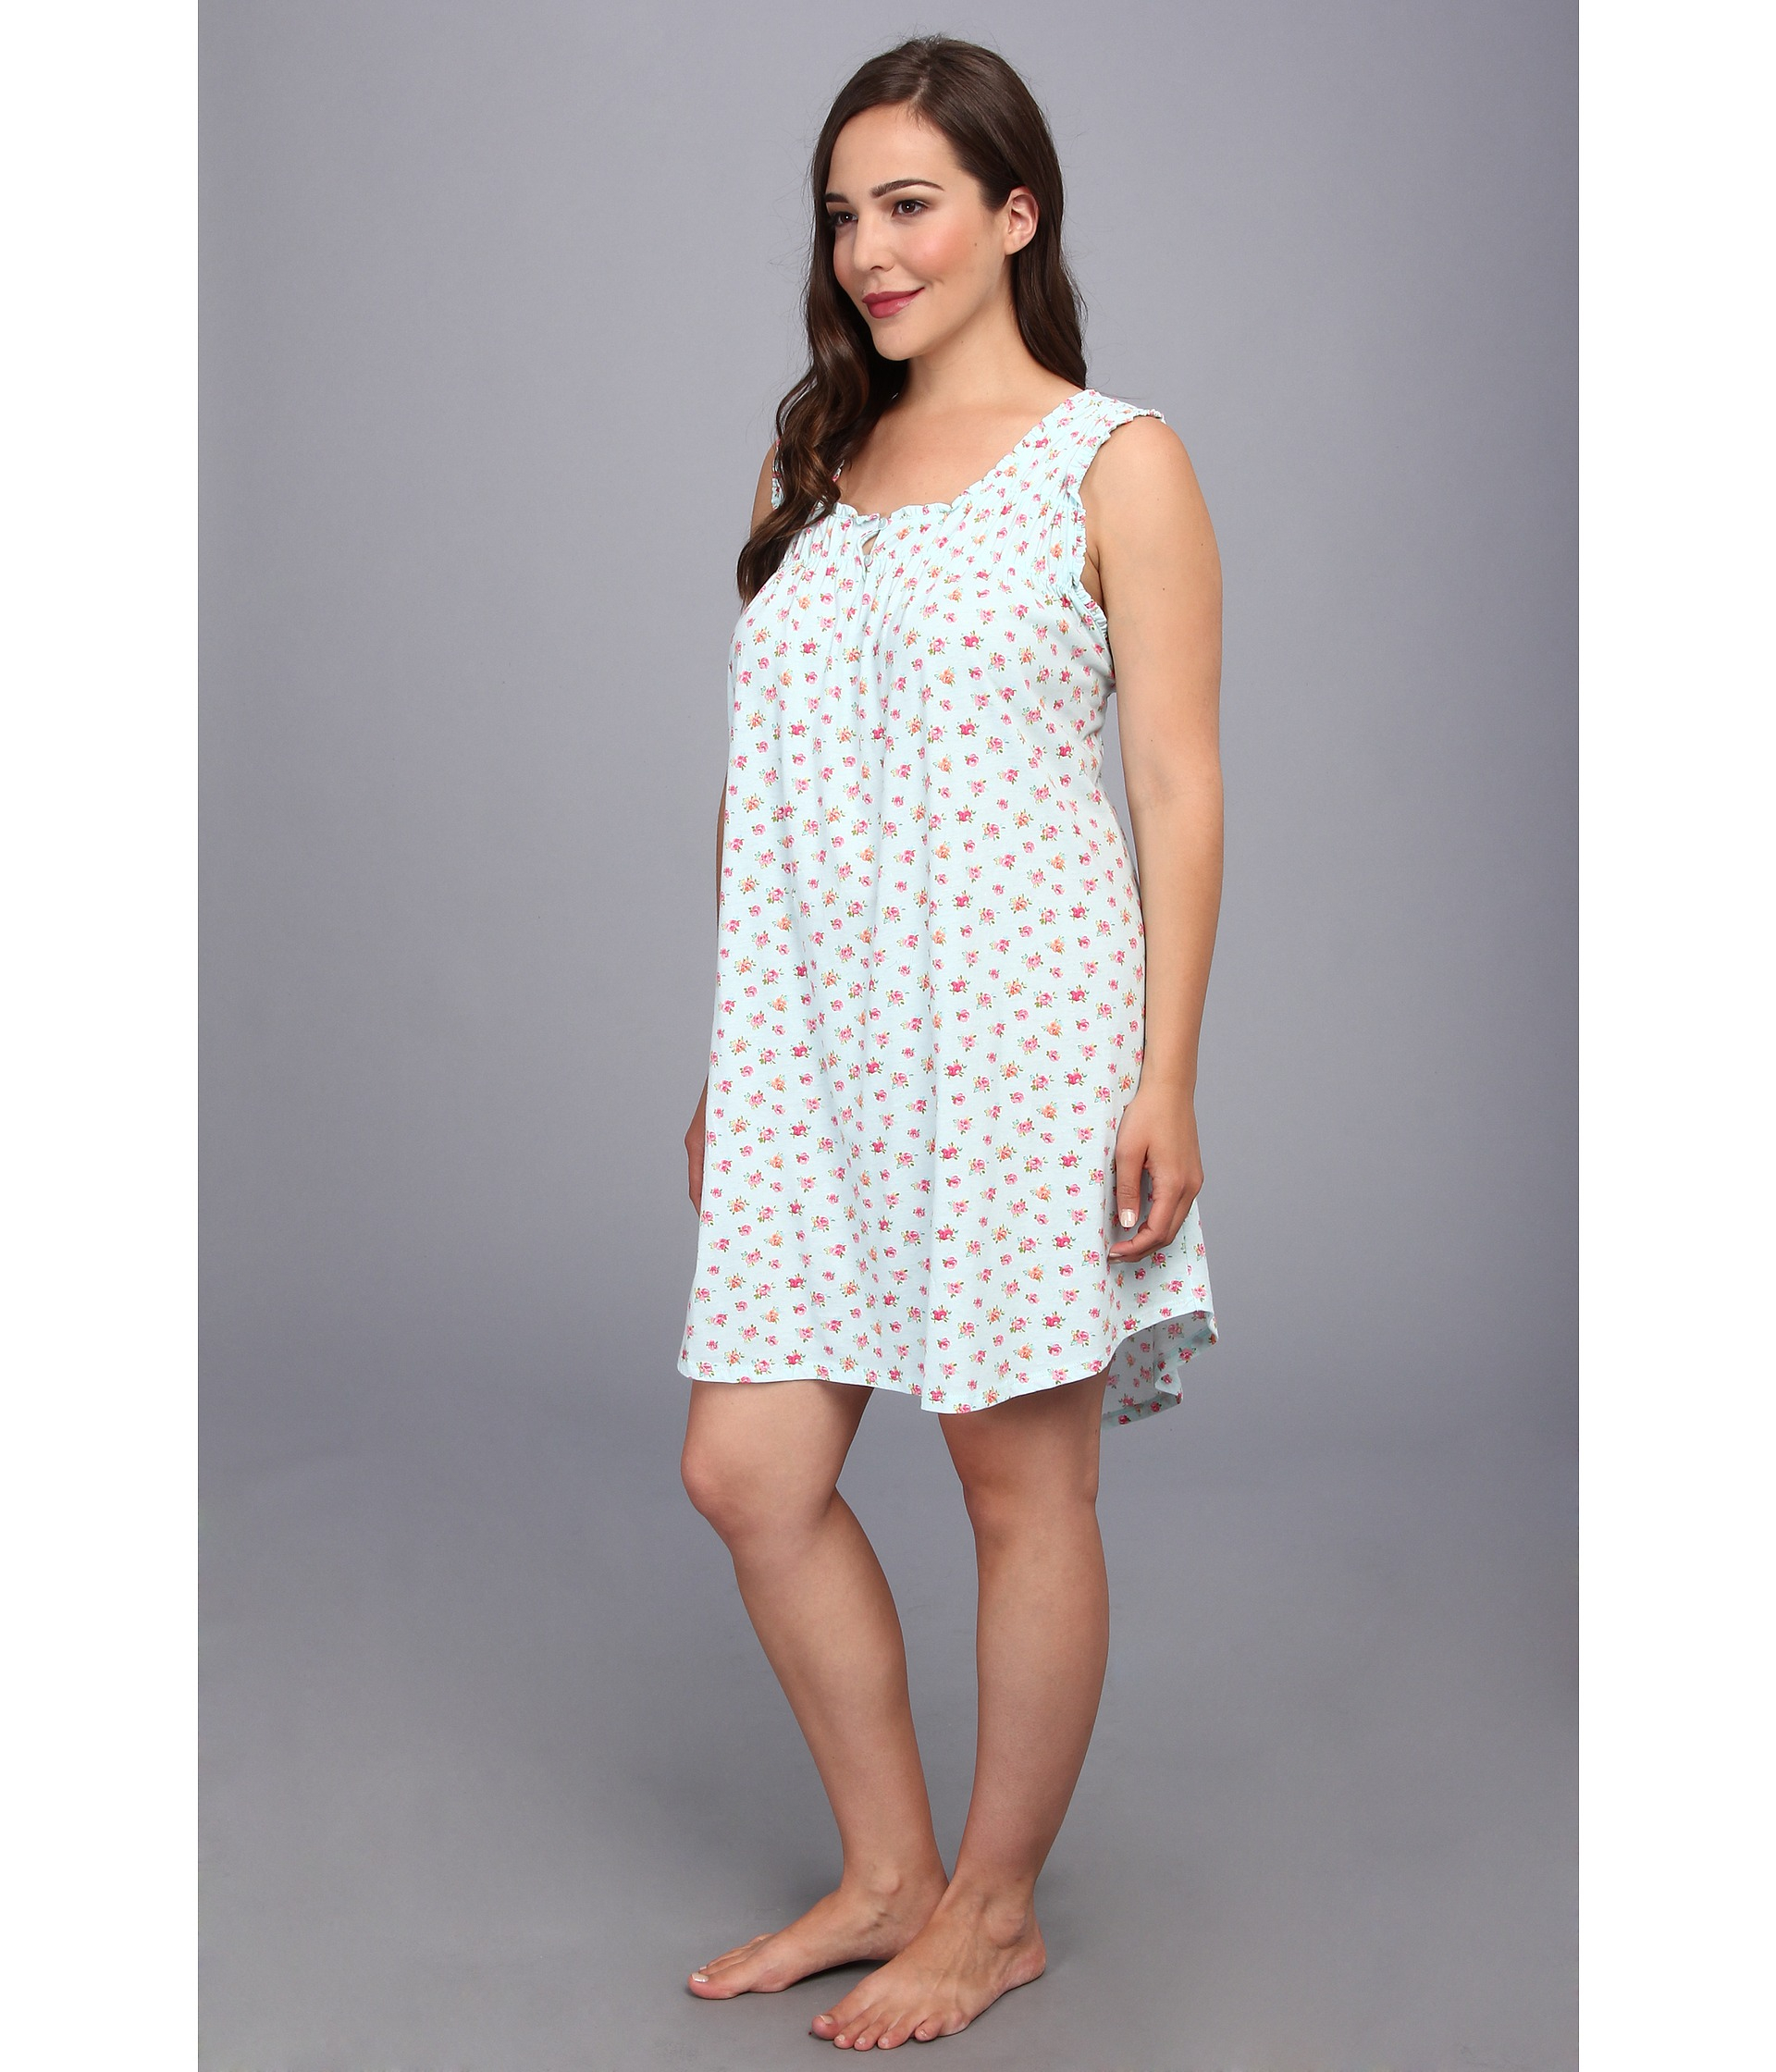 Short Chiffon Nightgown – Fashion dresses